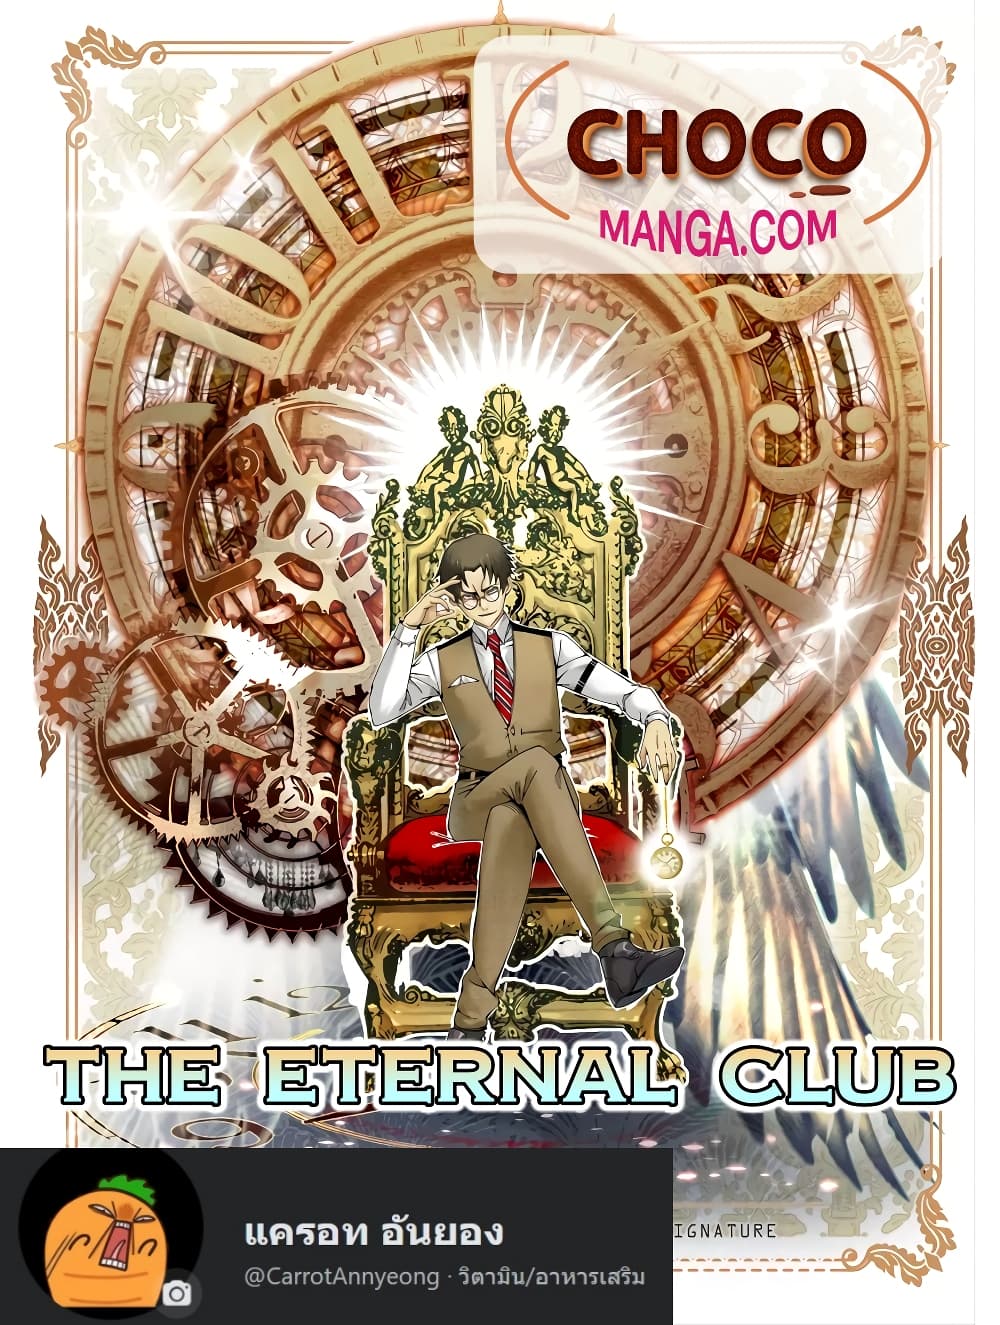 The Eternal Club 29 01